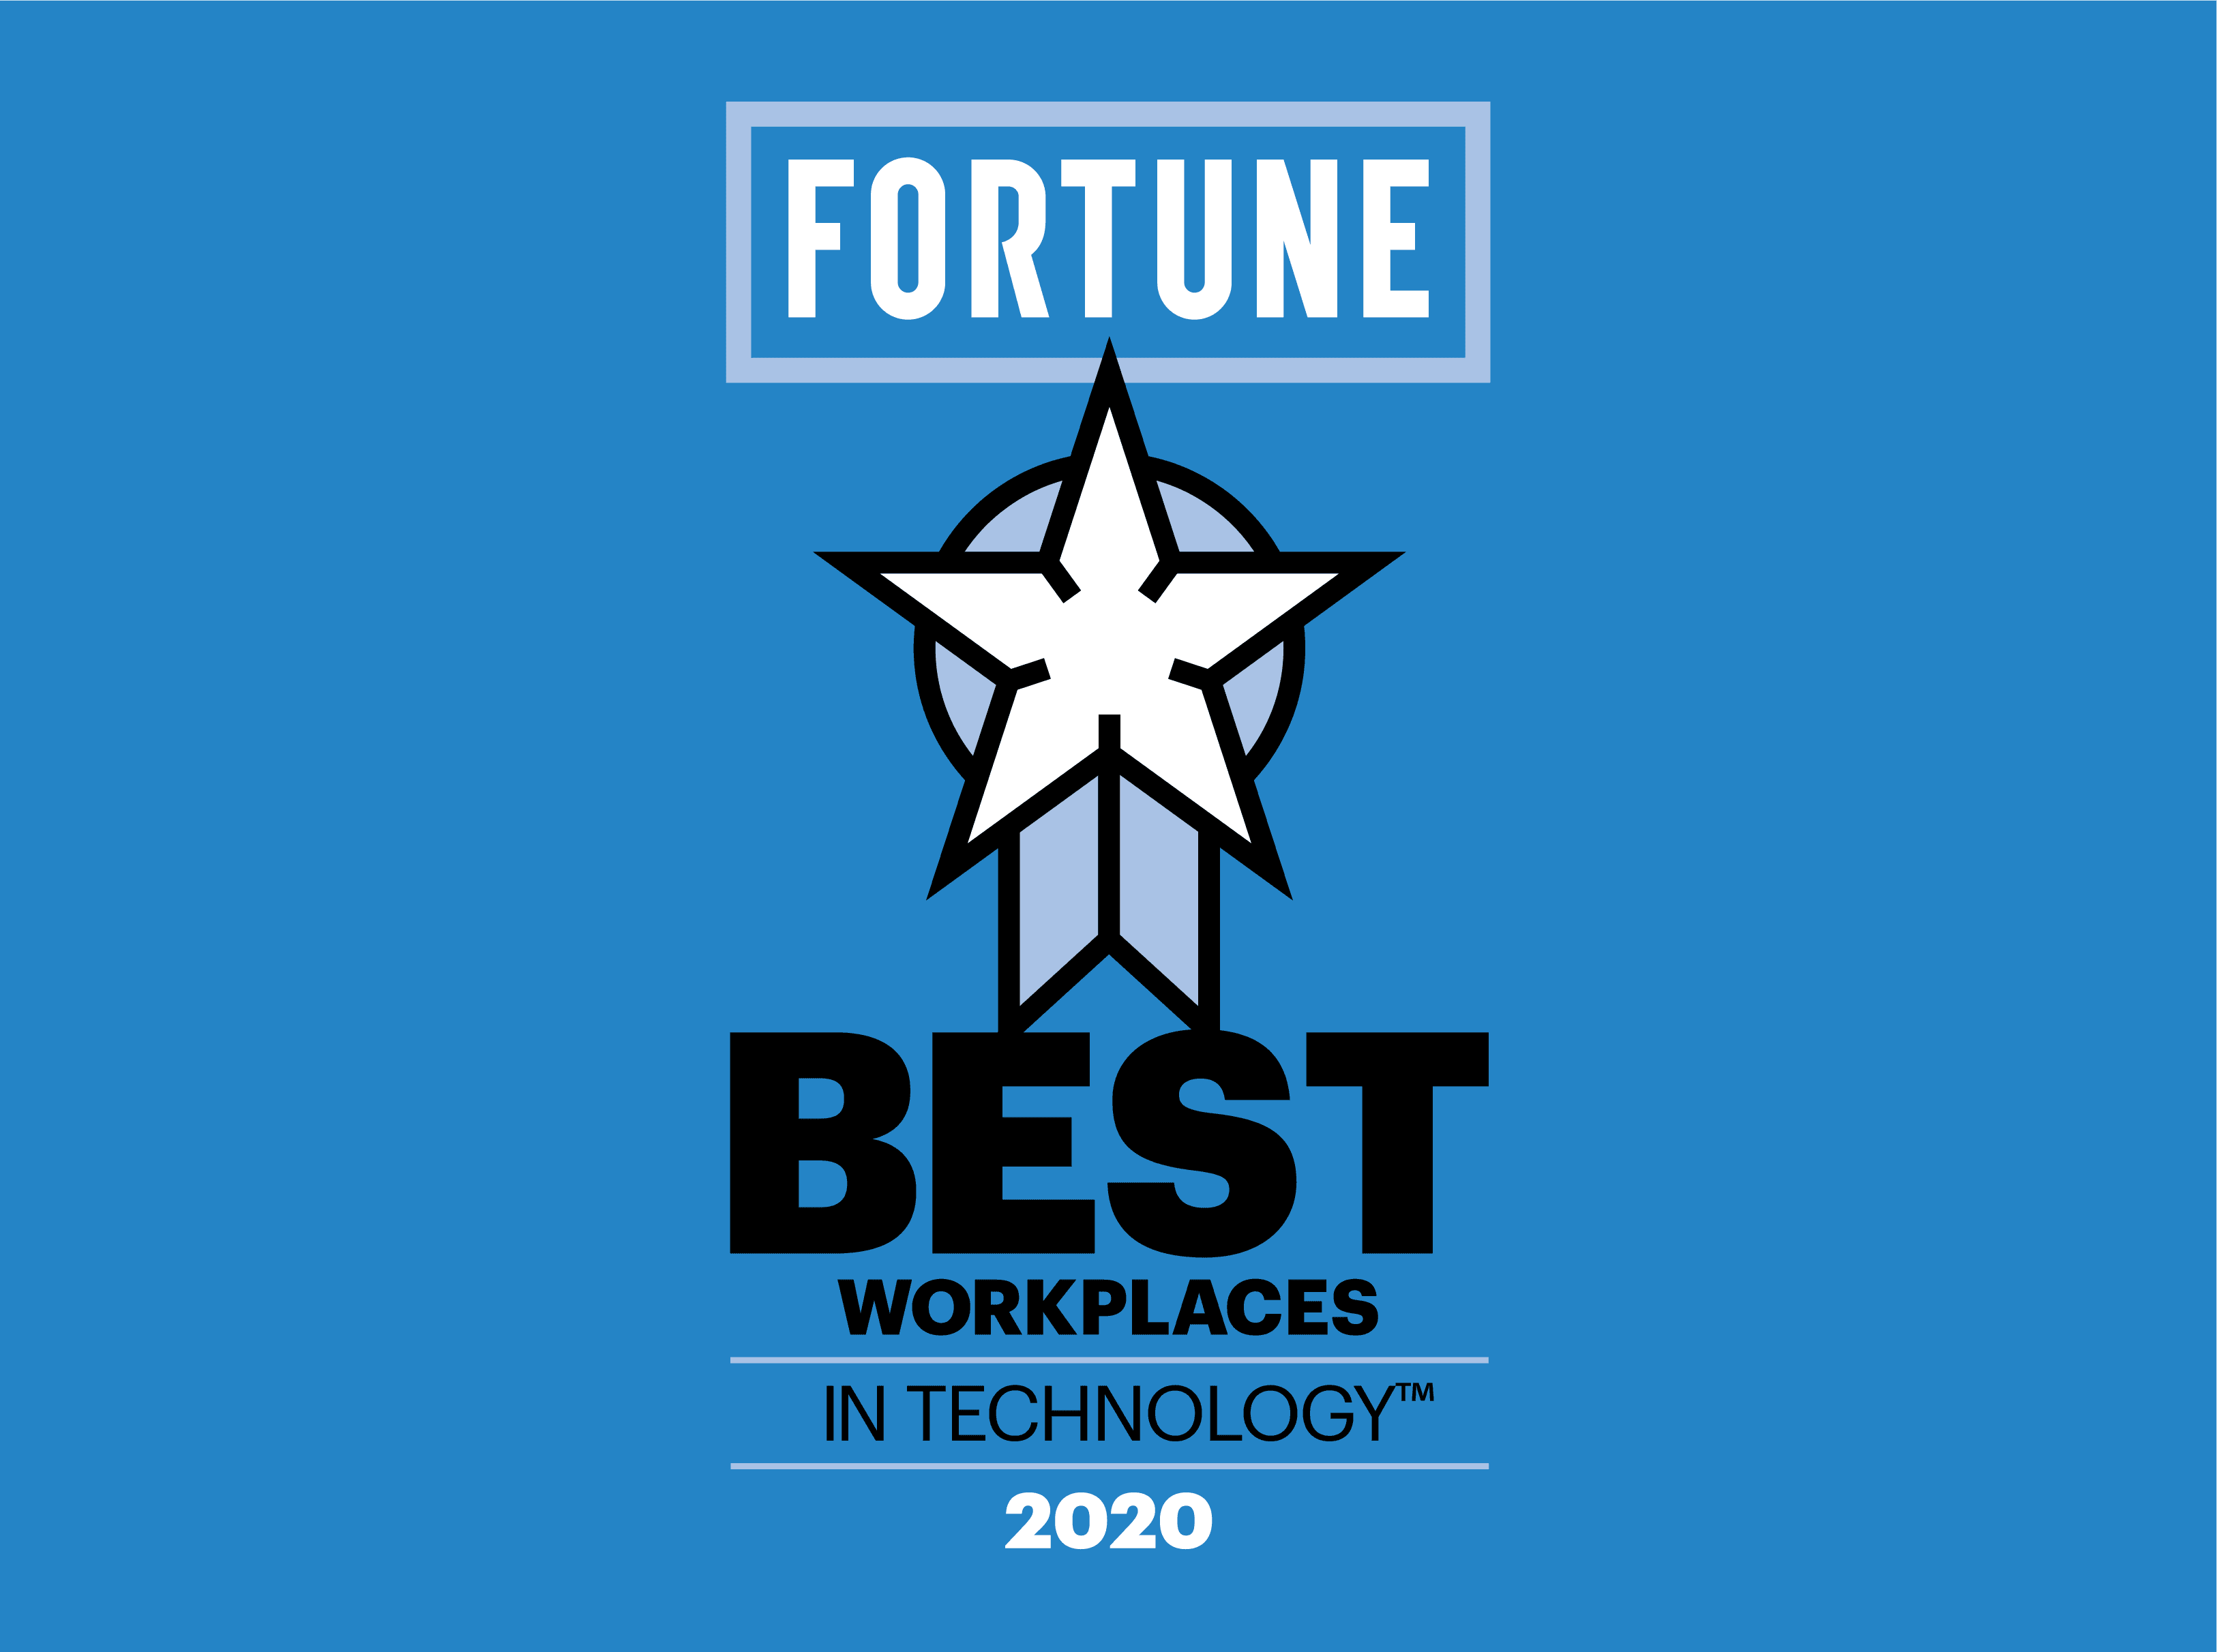 "Best Workplace in Technology 2020"